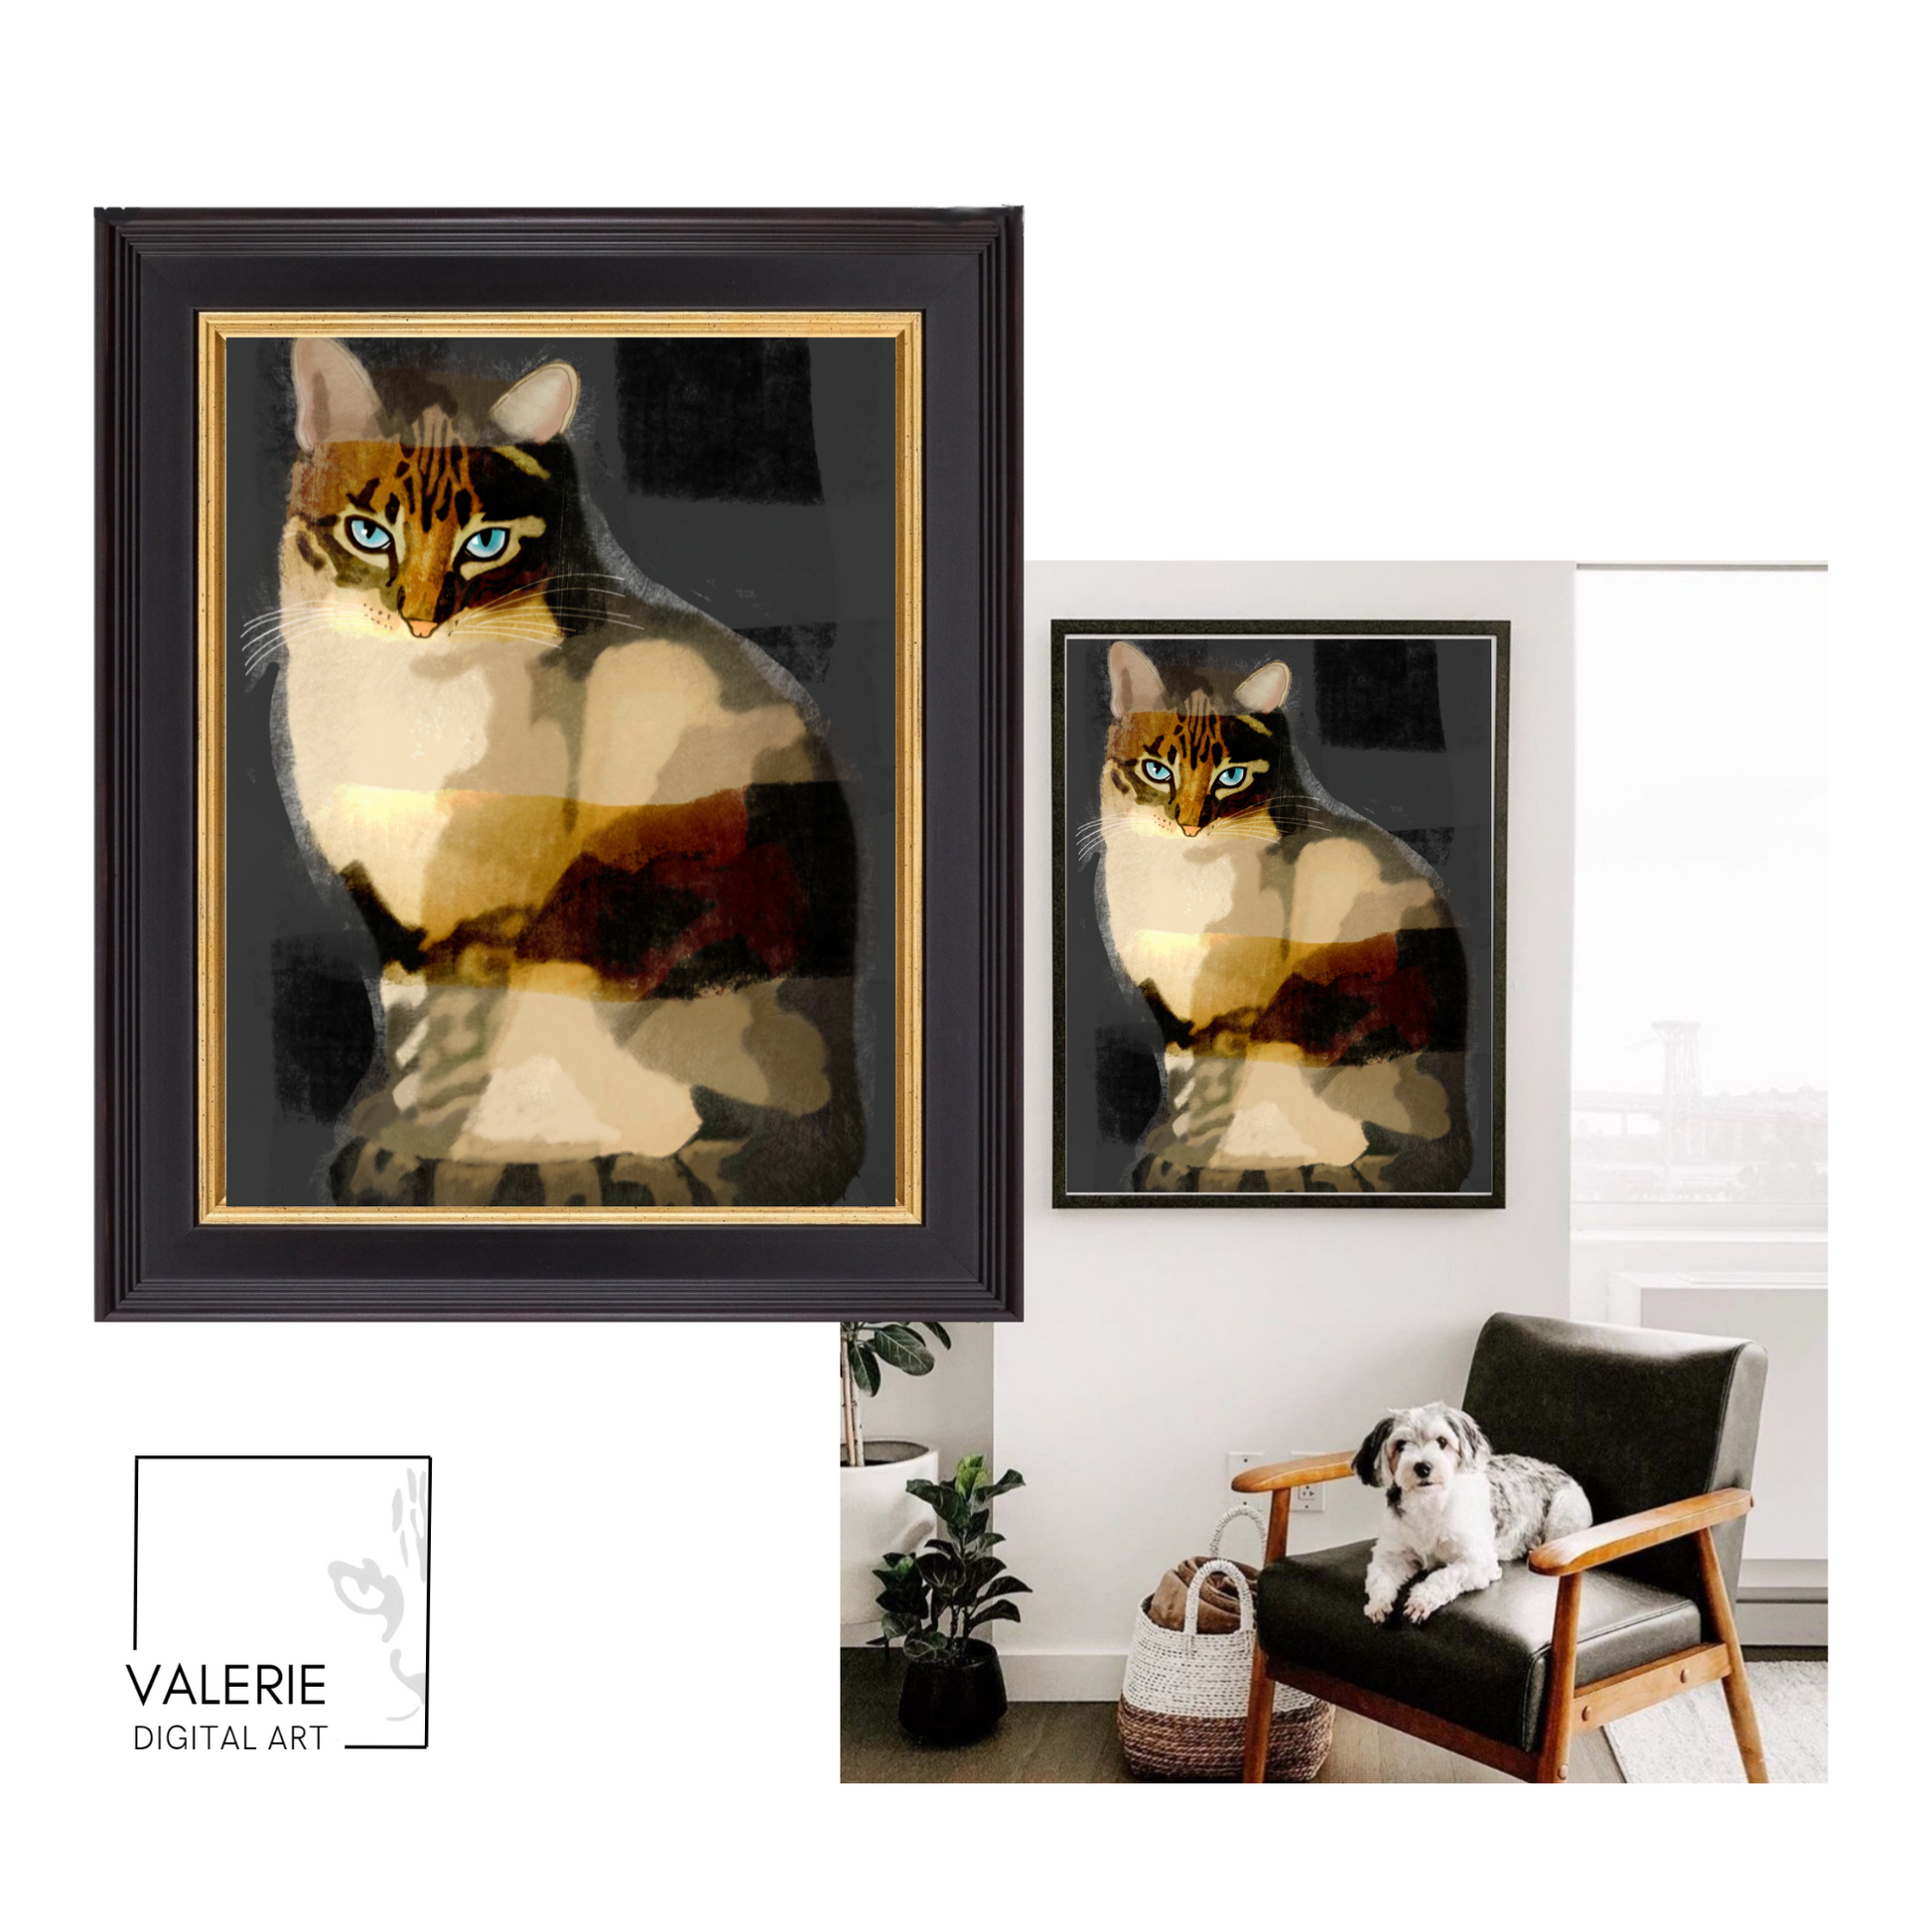 PISTOFF CAT Hahnemühle Photo Rag Print - valerie-digital-art